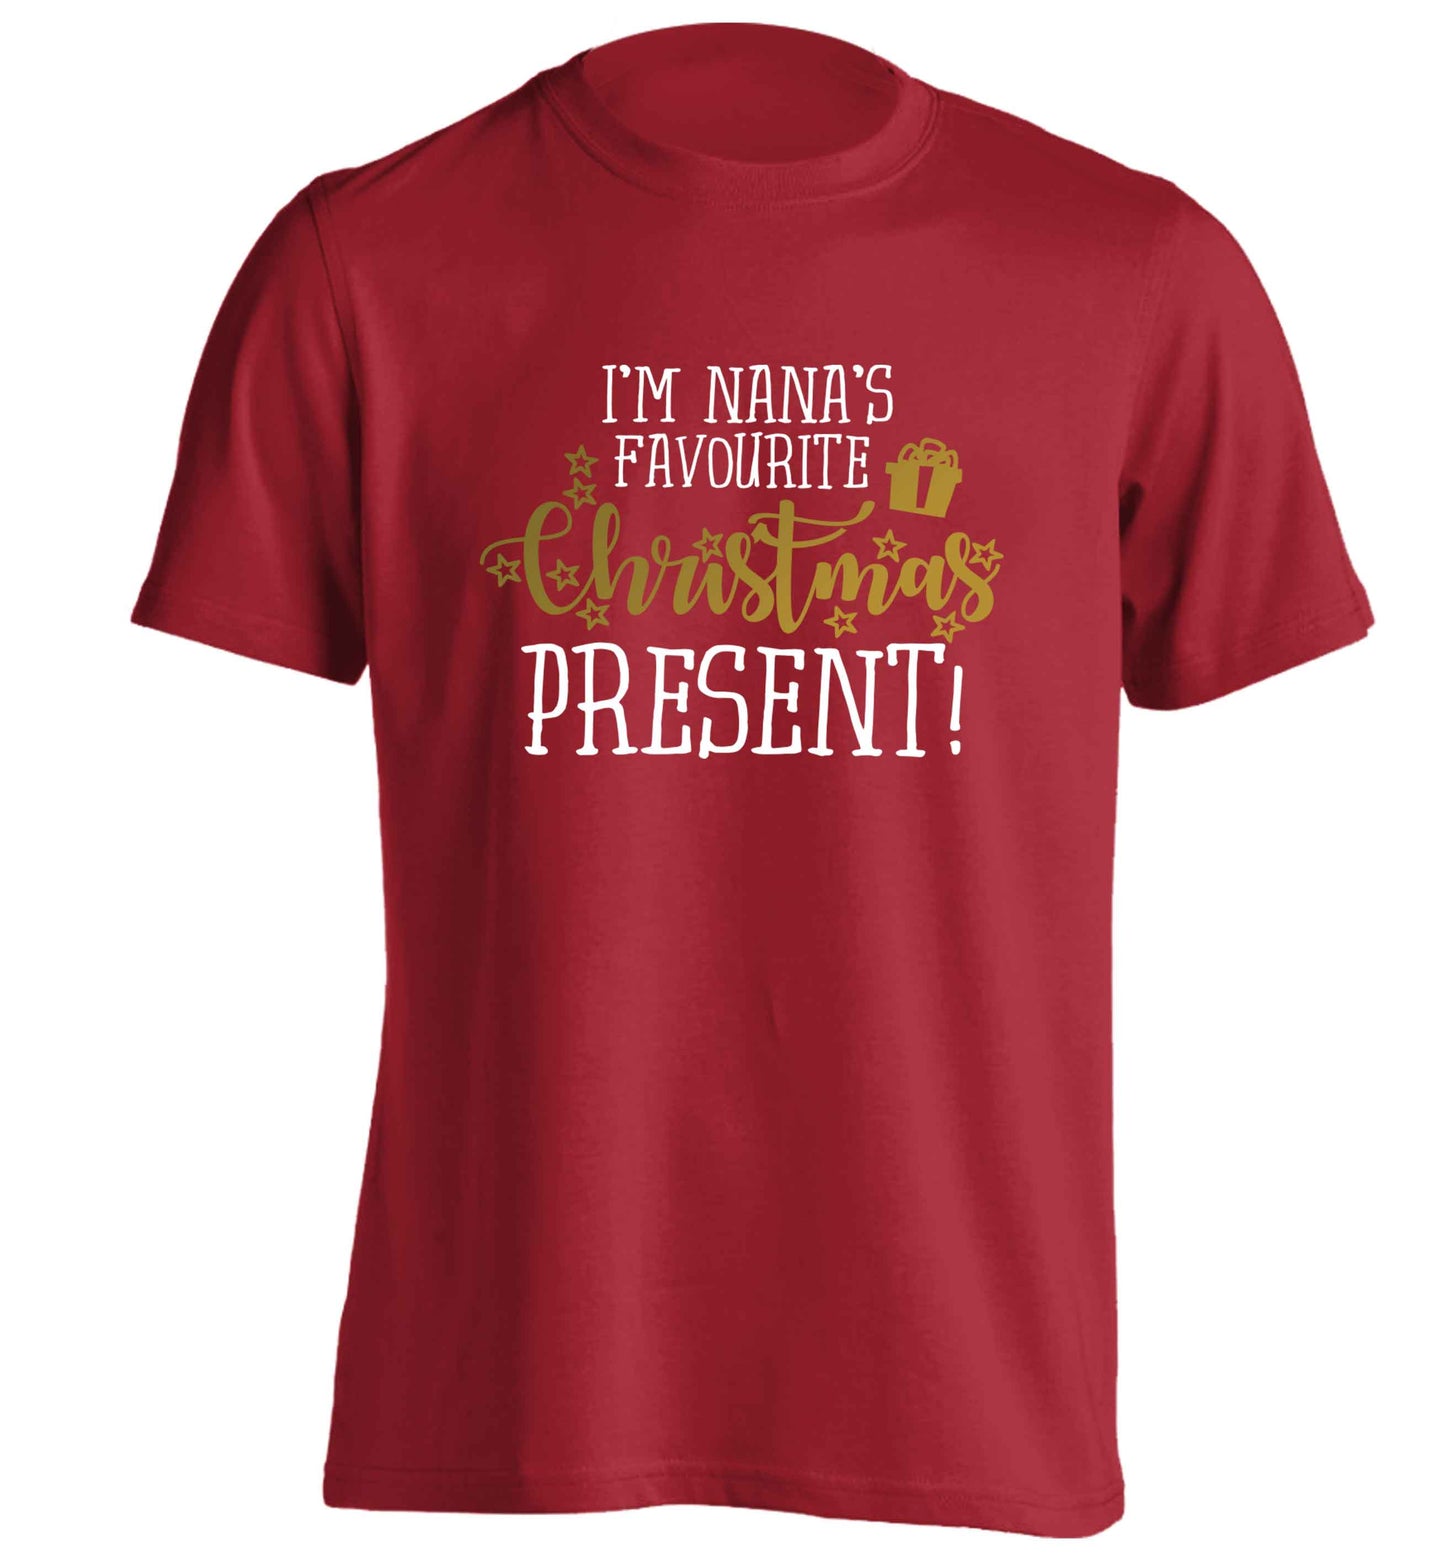 Nana's favourite Christmas present adults unisex red Tshirt 2XL